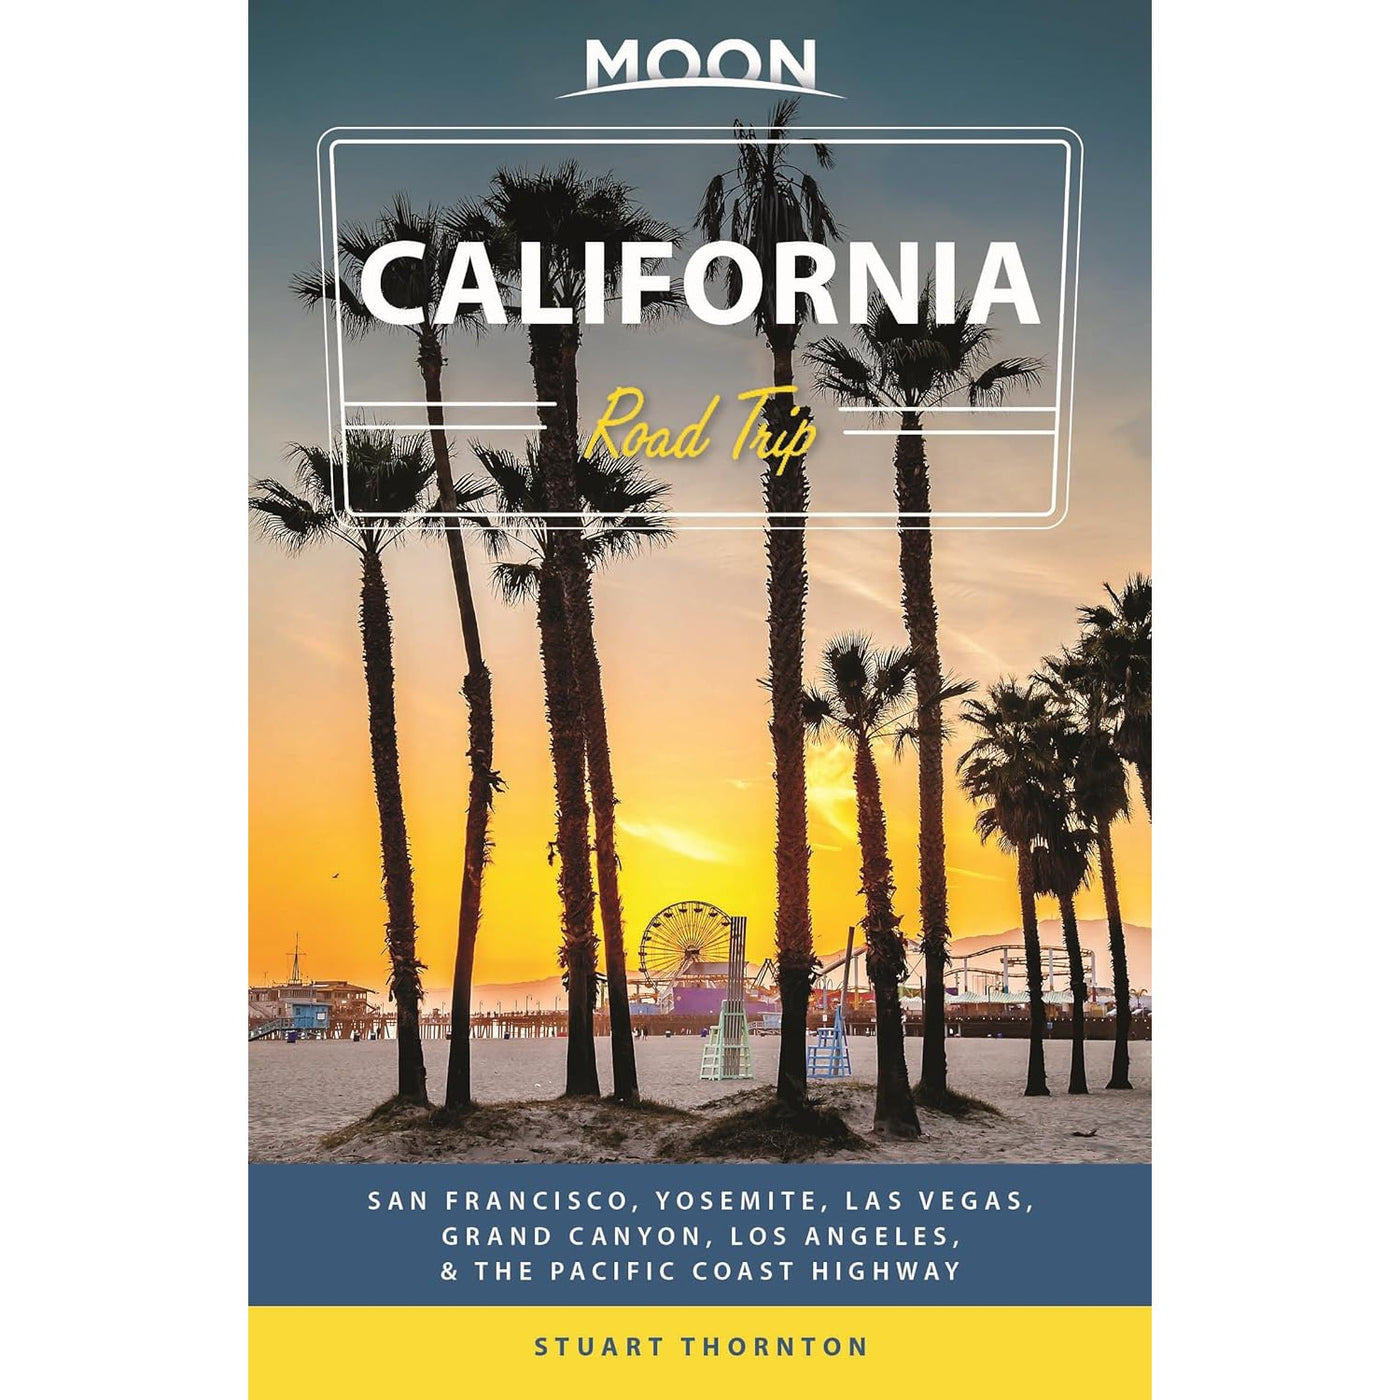 Moon: California Road Trip